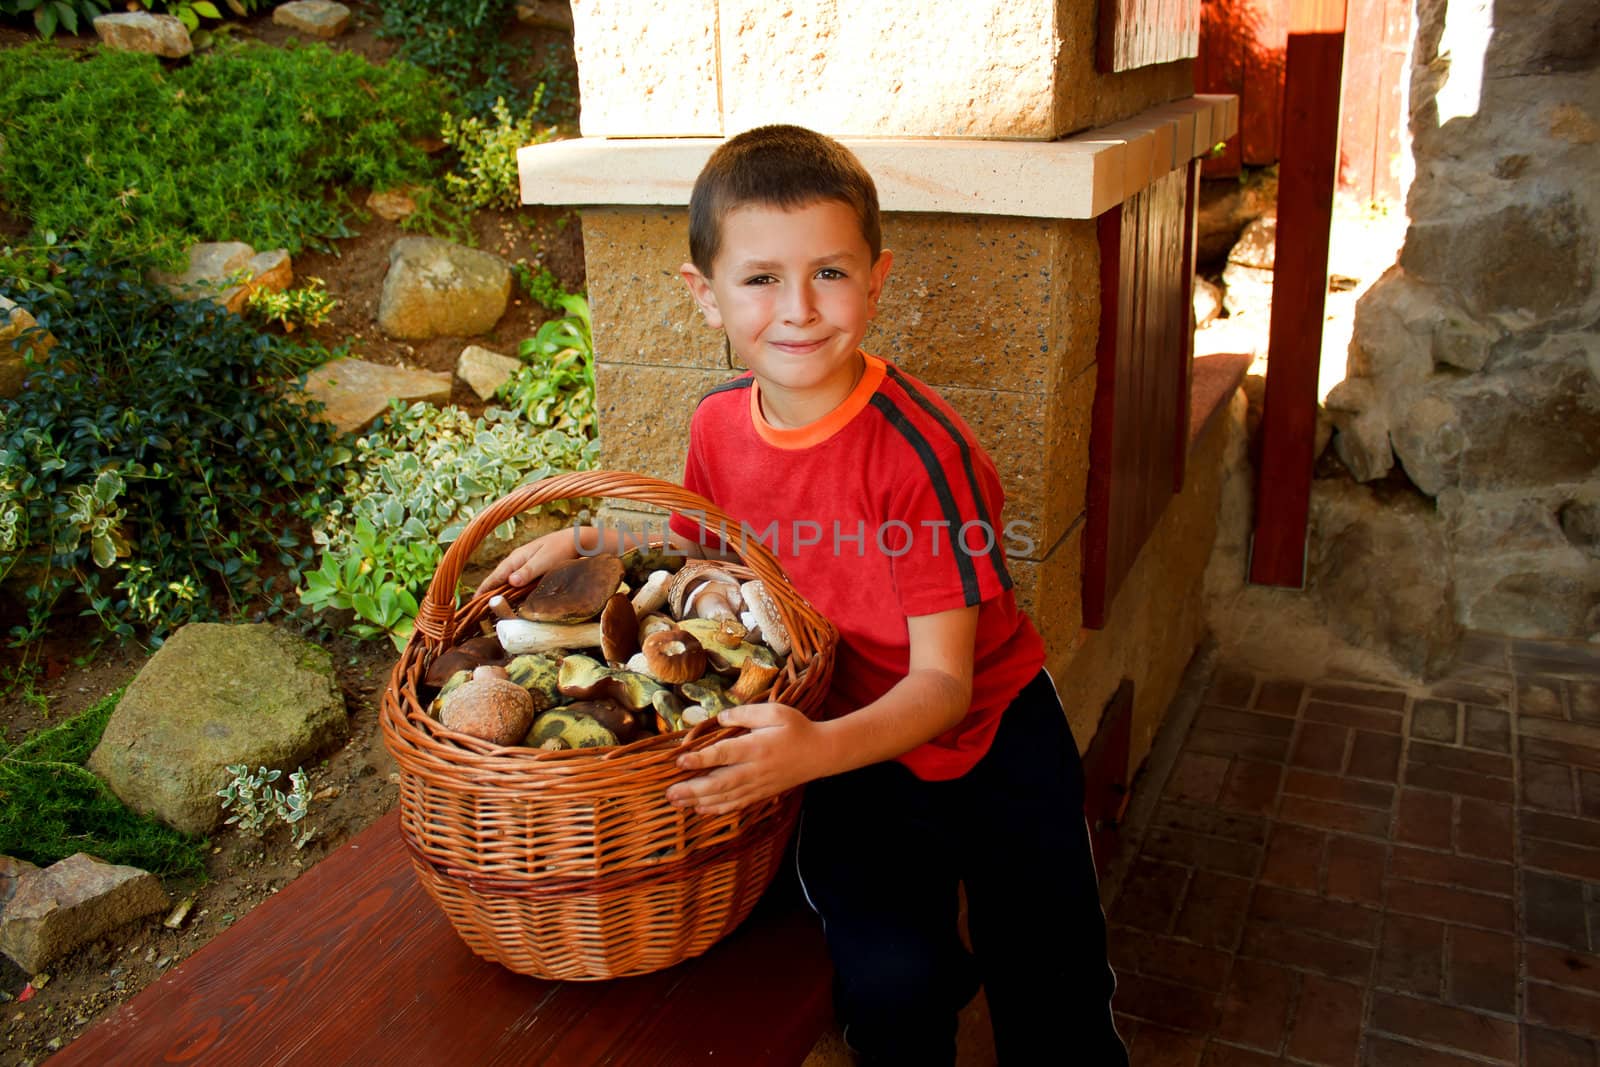 Small boy, mushroom picker with red Shirt